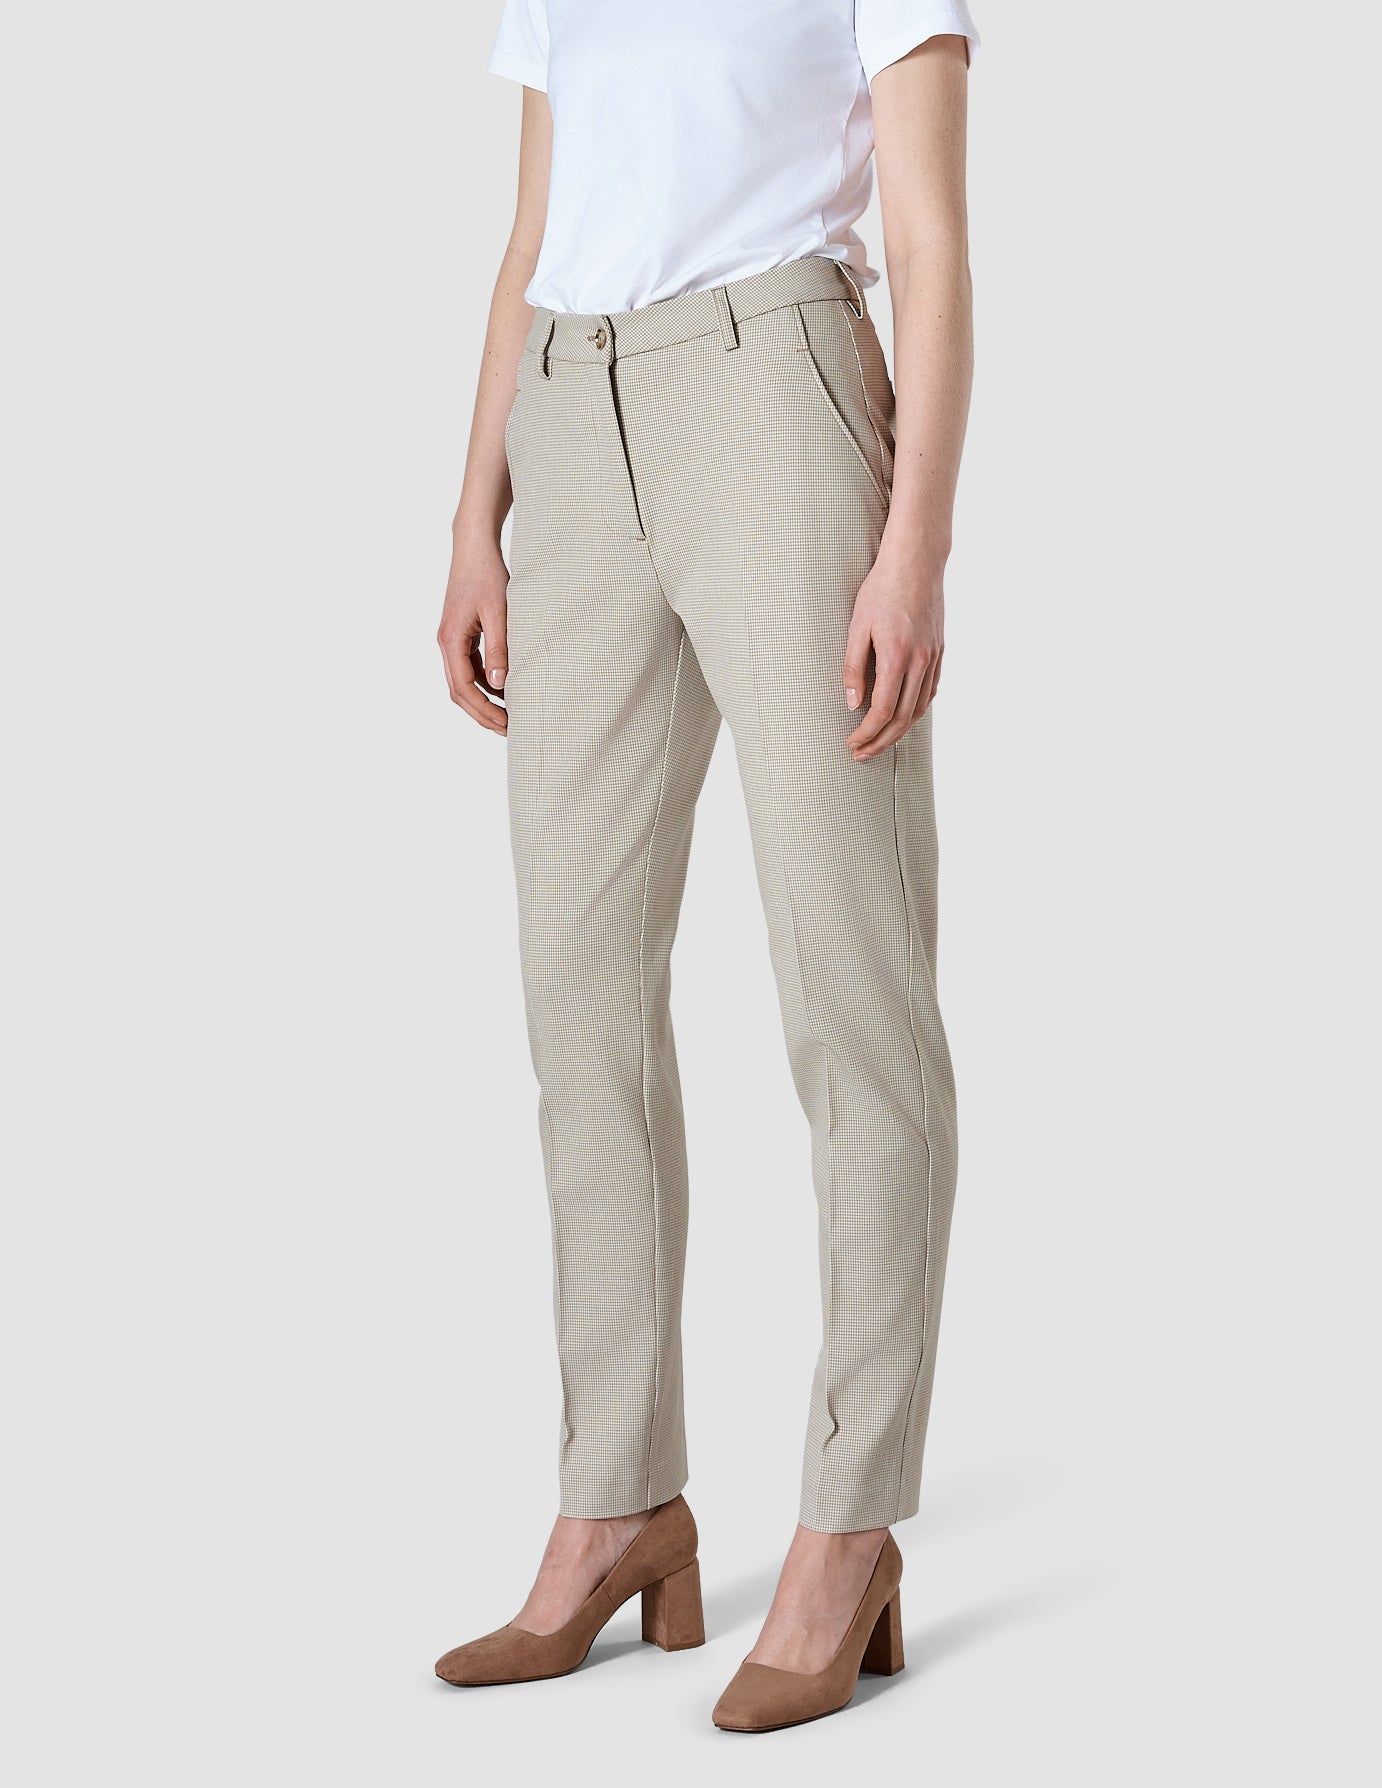 Lars Amadeus Men's Plaid Dress Pants Skinny Fit Flat Front Business Checked  Trousers - Walmart.com